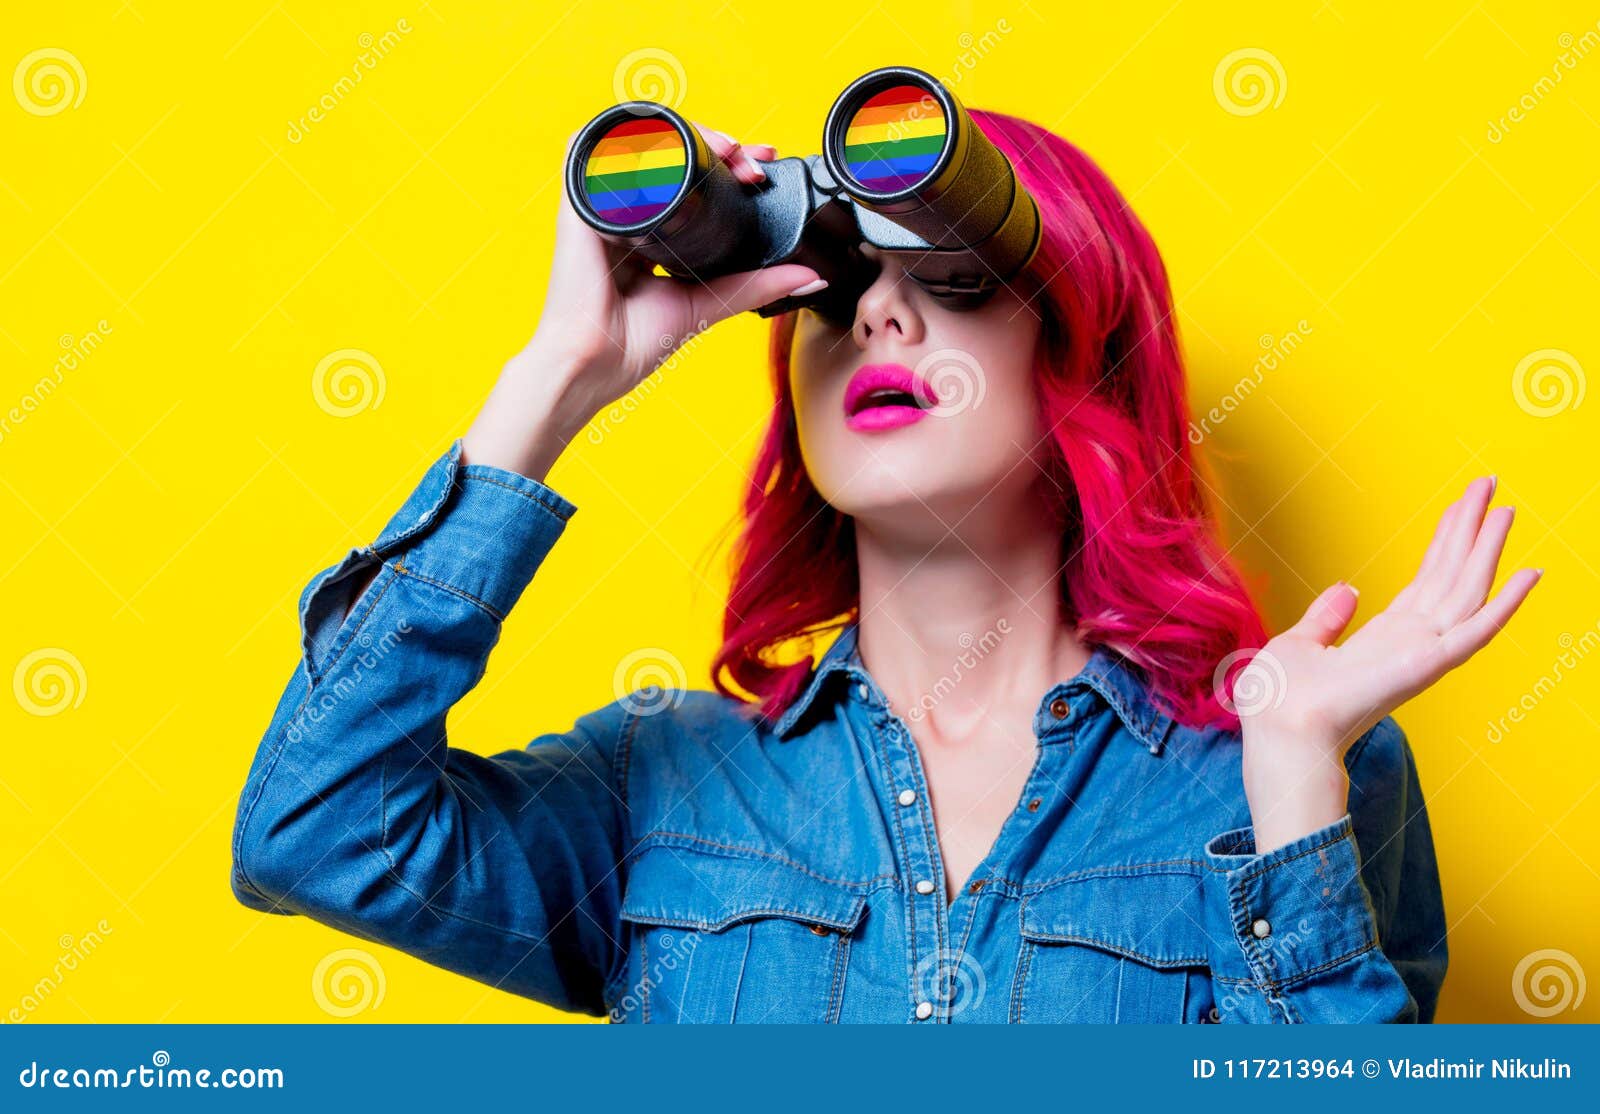 Girl in Blue Shirt Holding Binoculars with Rainbow Stock Photo - Image ...